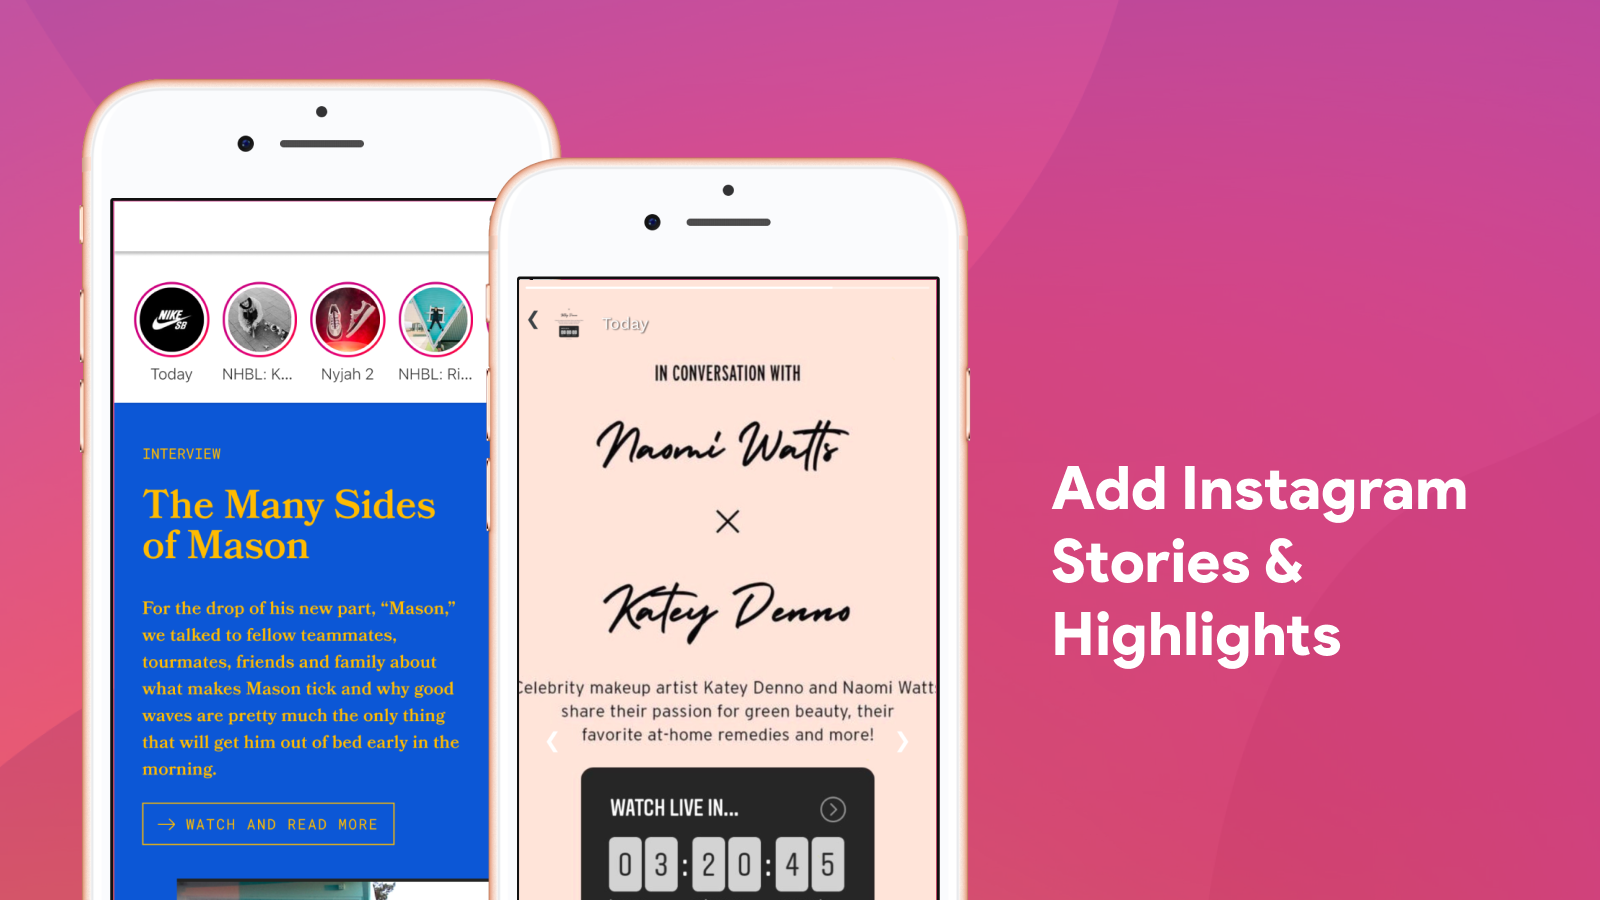 Add Instagram Stories & Highlight